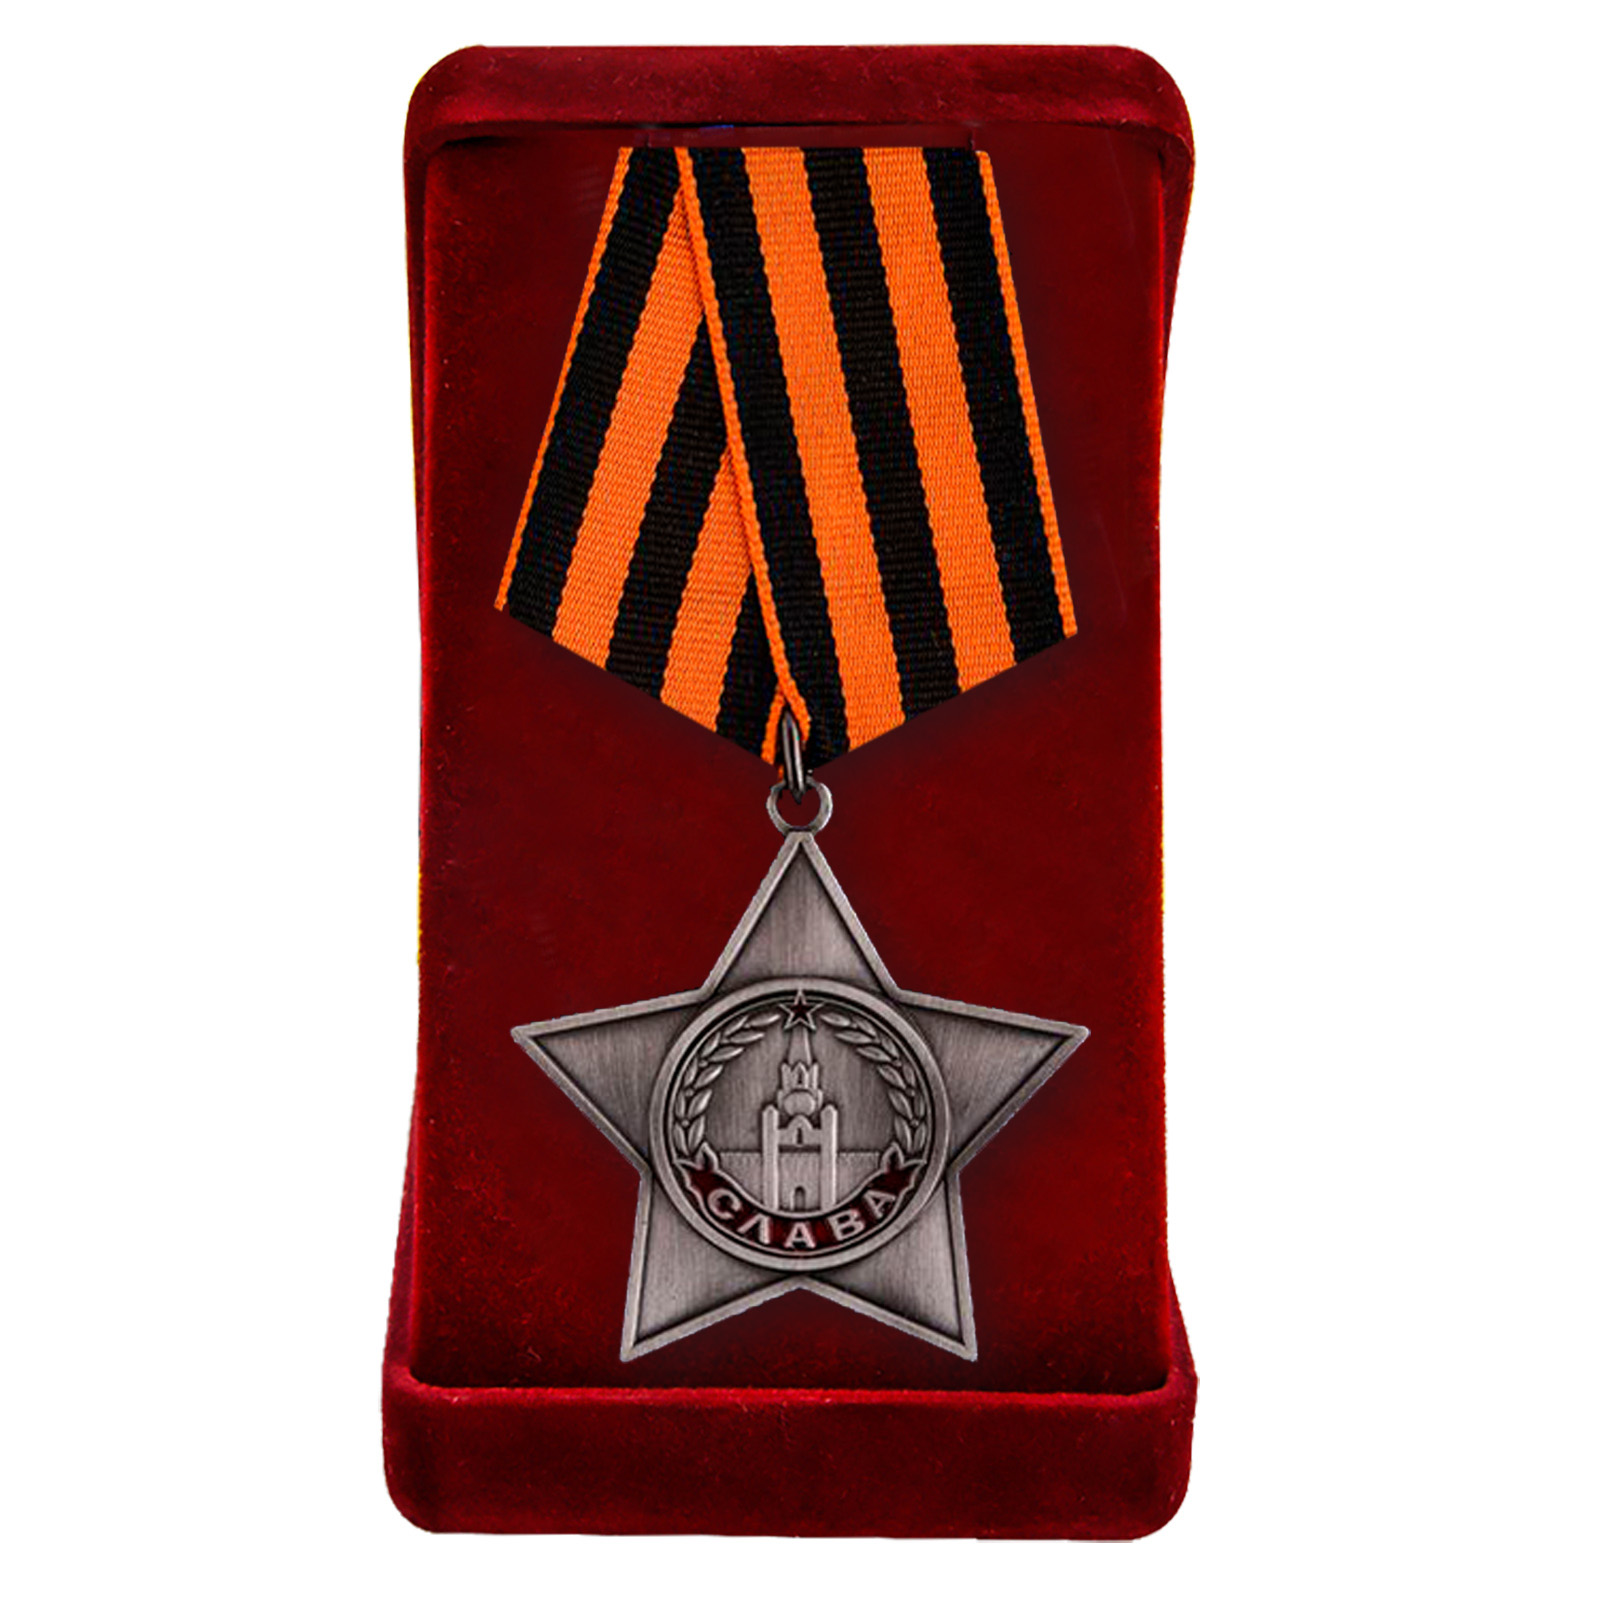 Орден Славы III степени - муляж в бархатистом футляре